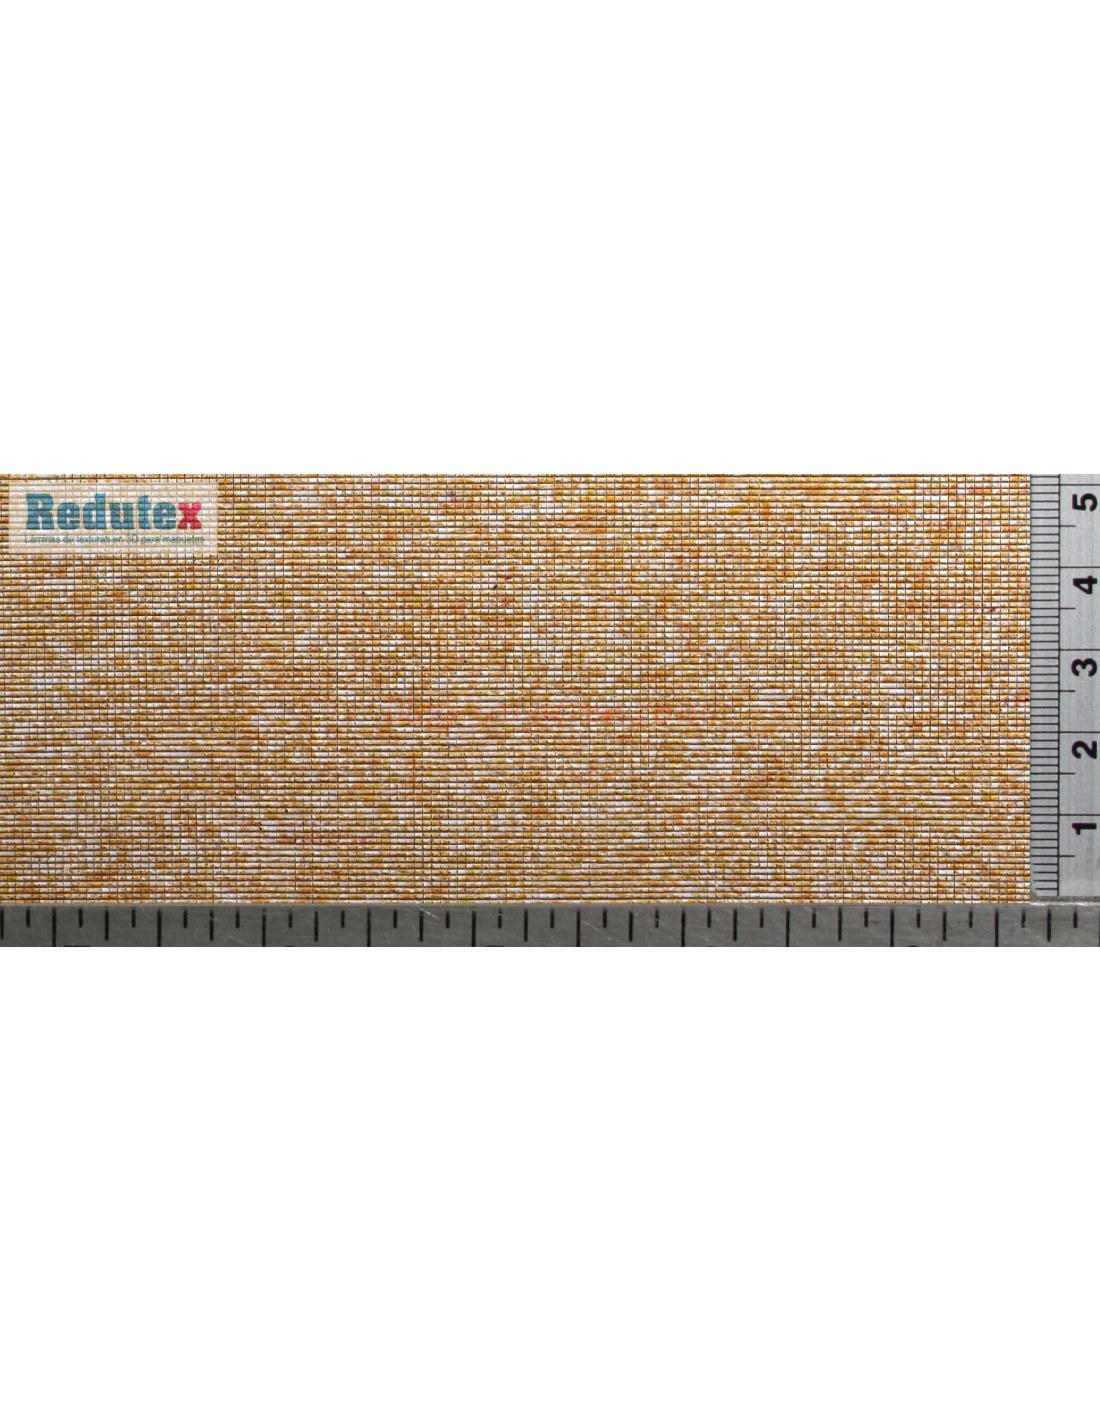 Redutex – Teja Arabe Terracota ( Policromado ), Ref: 220TA122, acabado natural